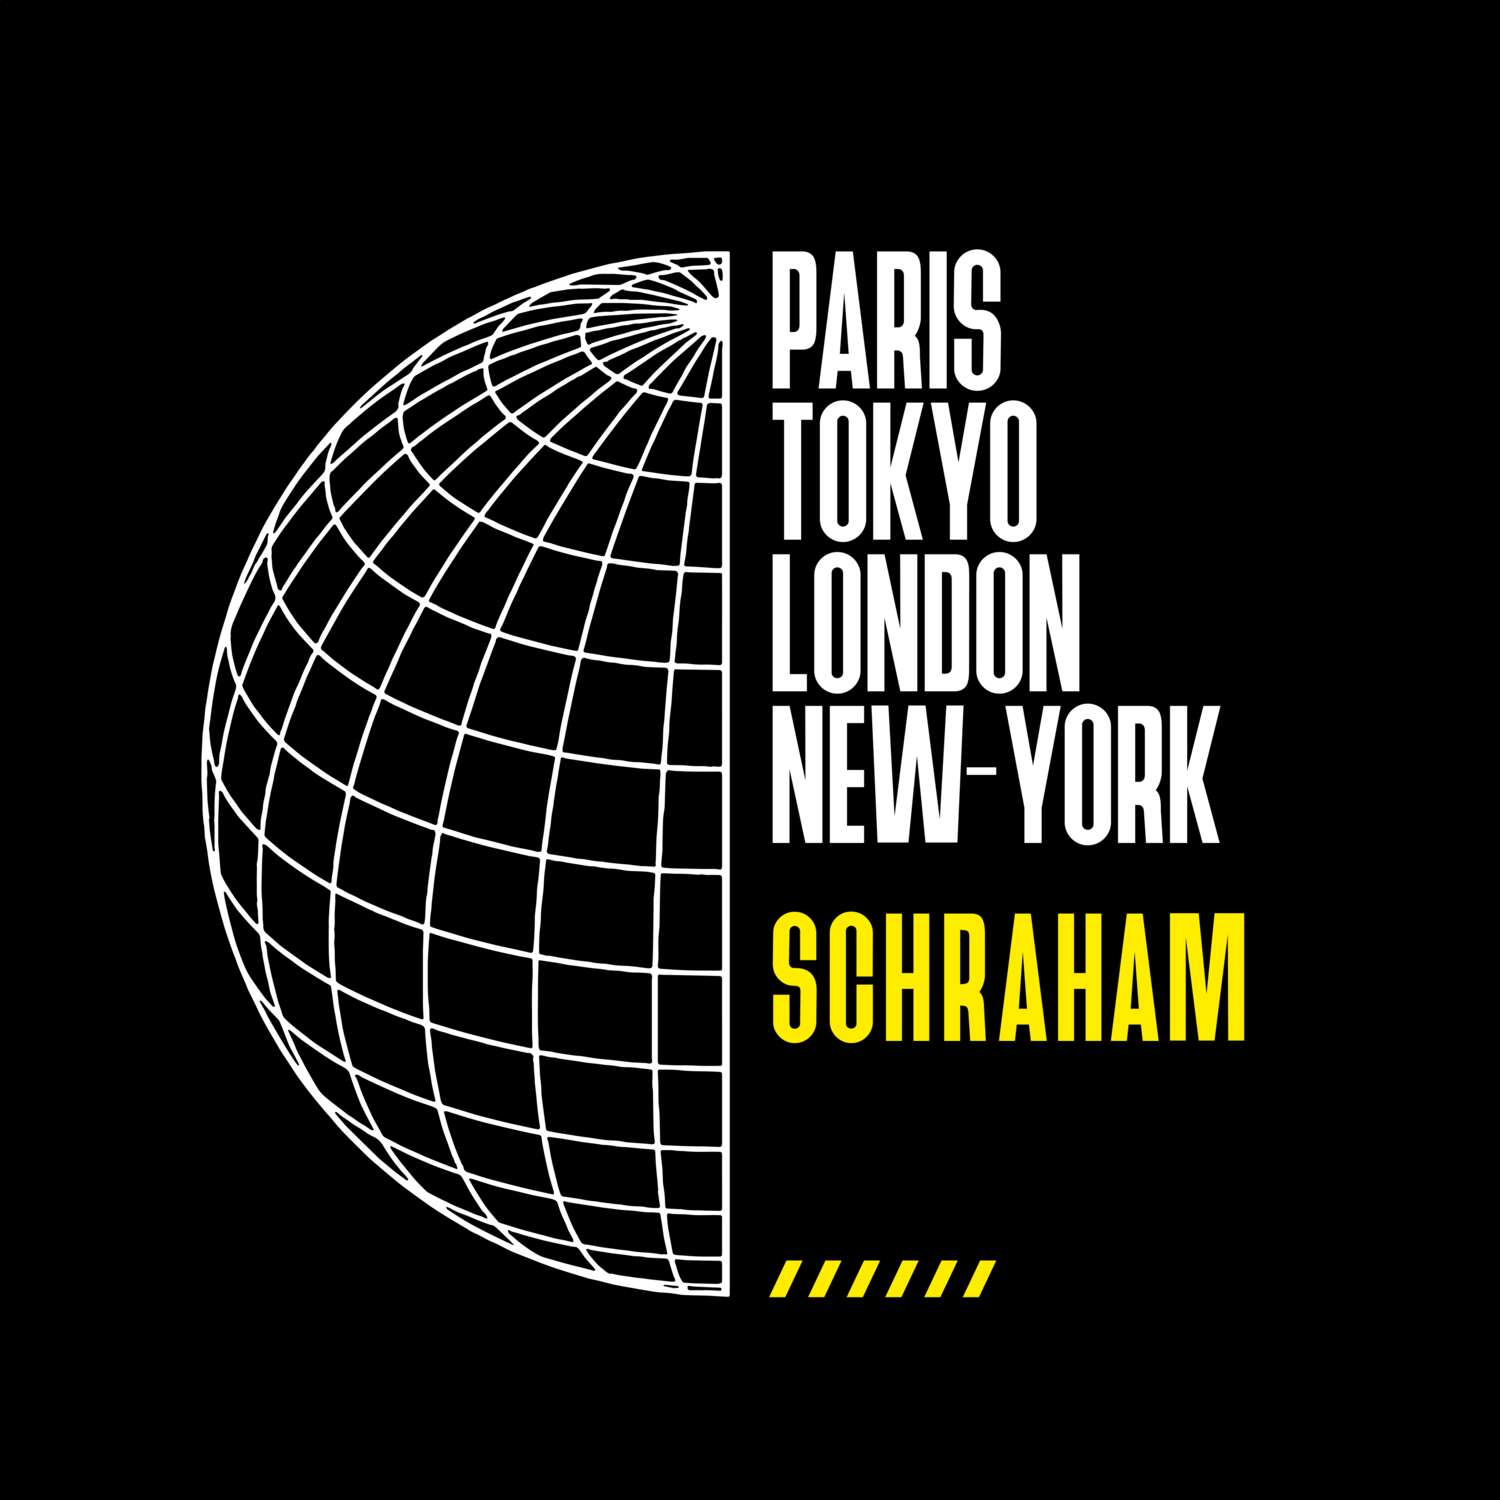 Schraham T-Shirt »Paris Tokyo London«